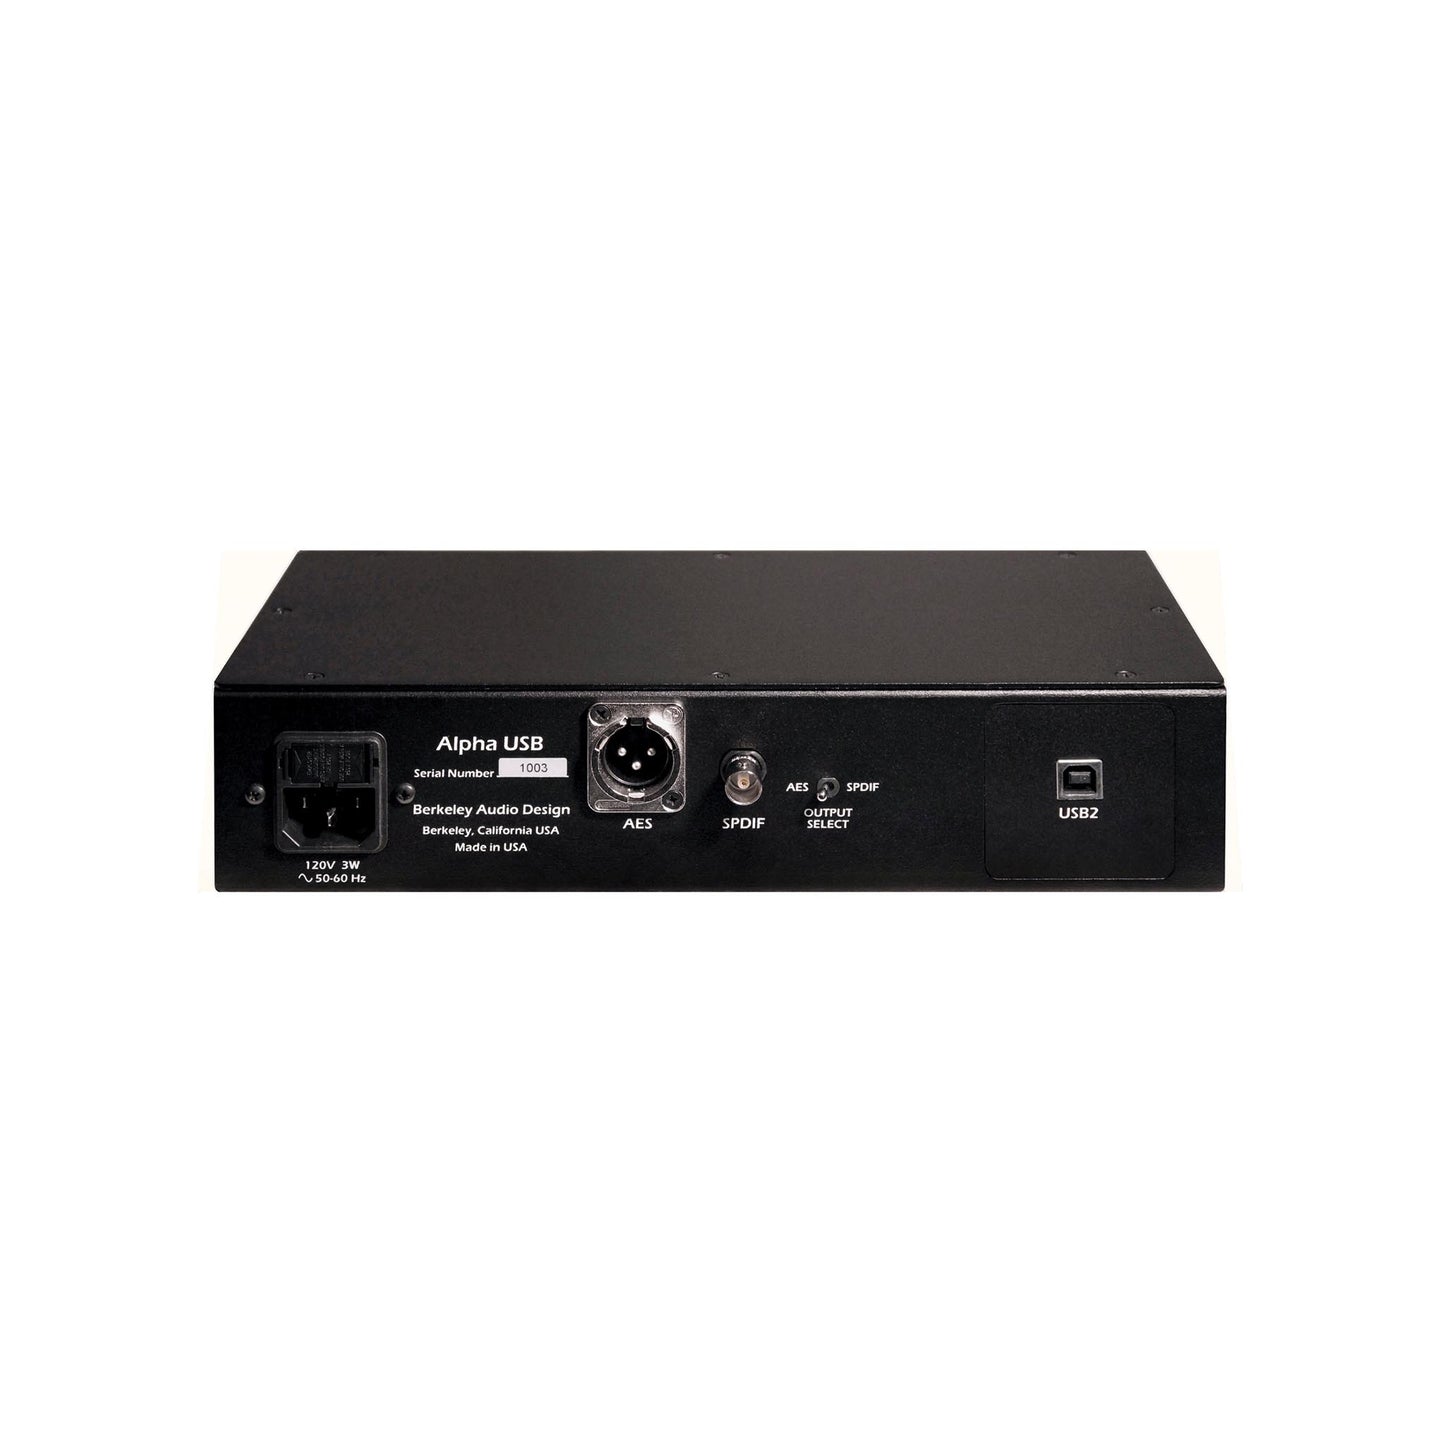 Berkeley Audio Design Alpha USB Series 2 Interface